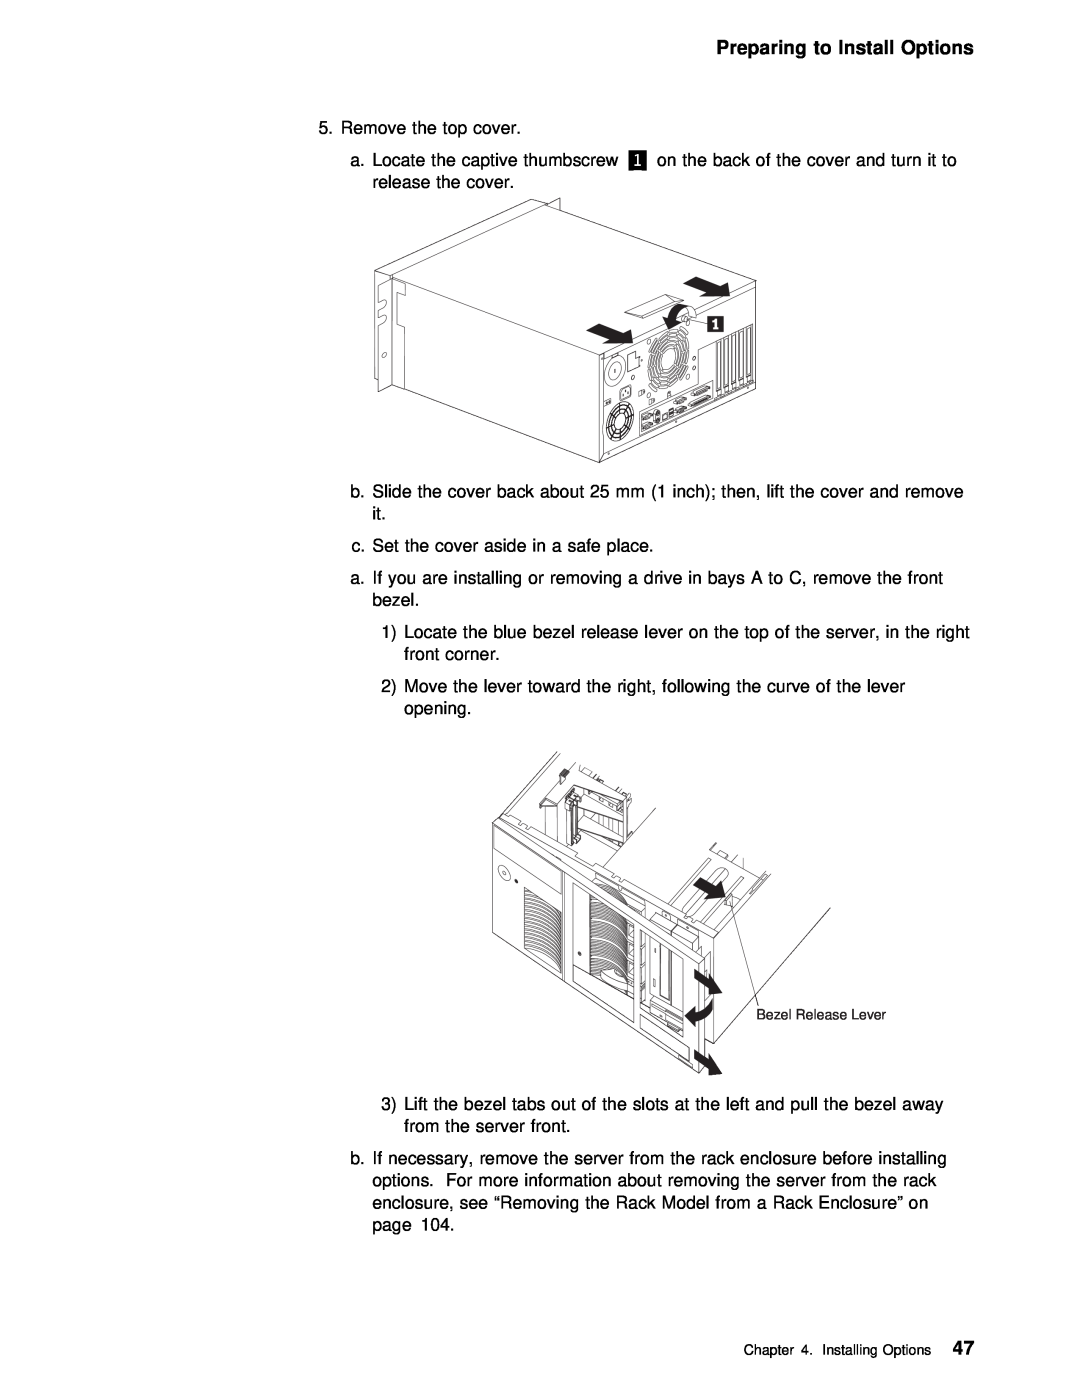 IBM 5000 manual Preparing to Install Options 